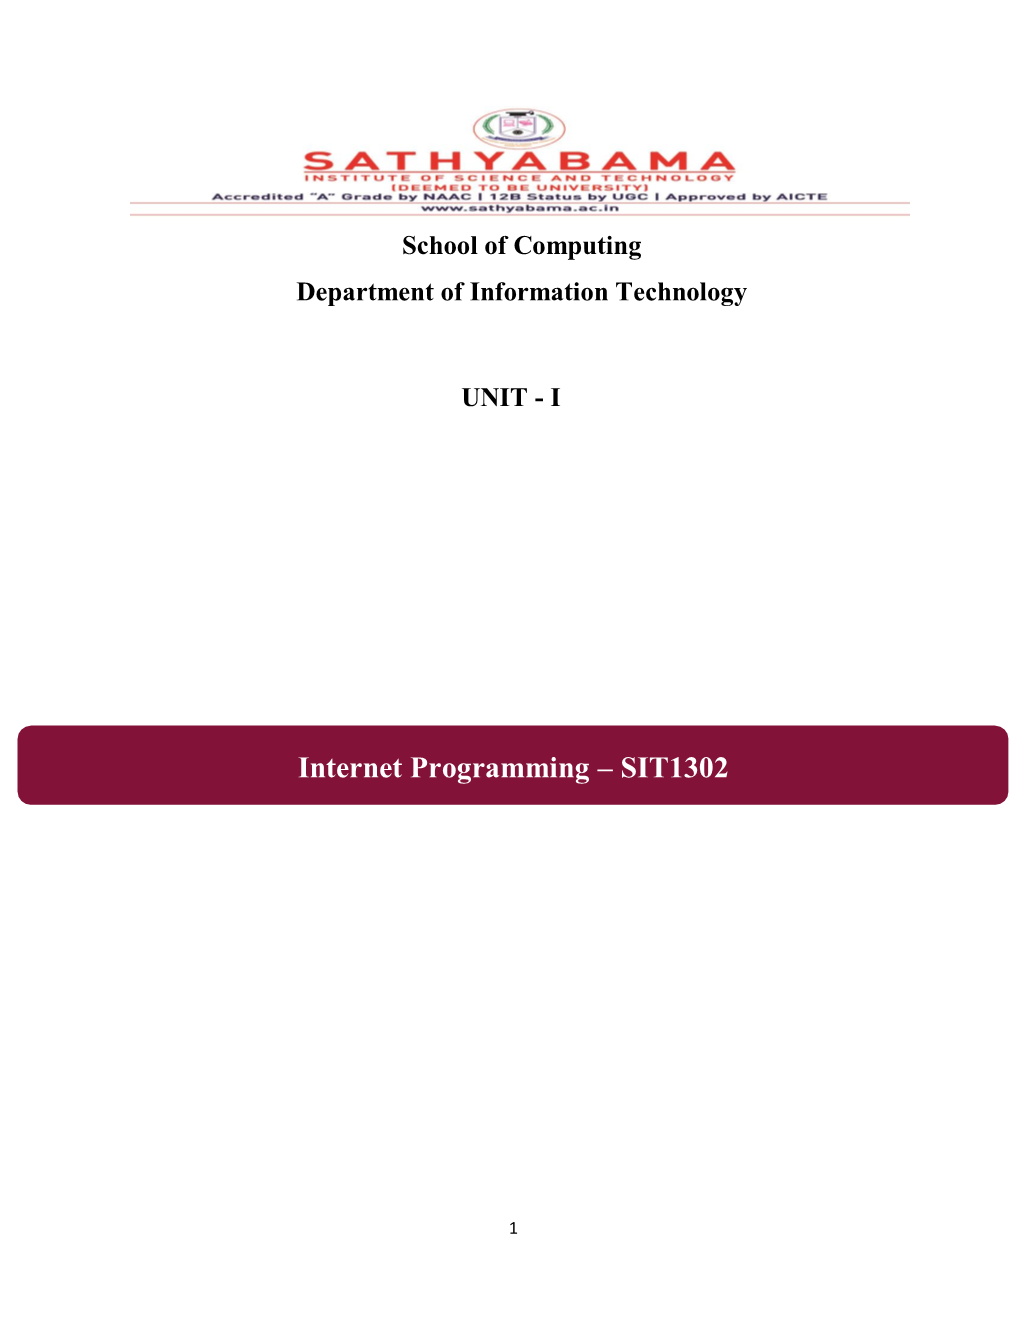 Internet Programming – SIT1302